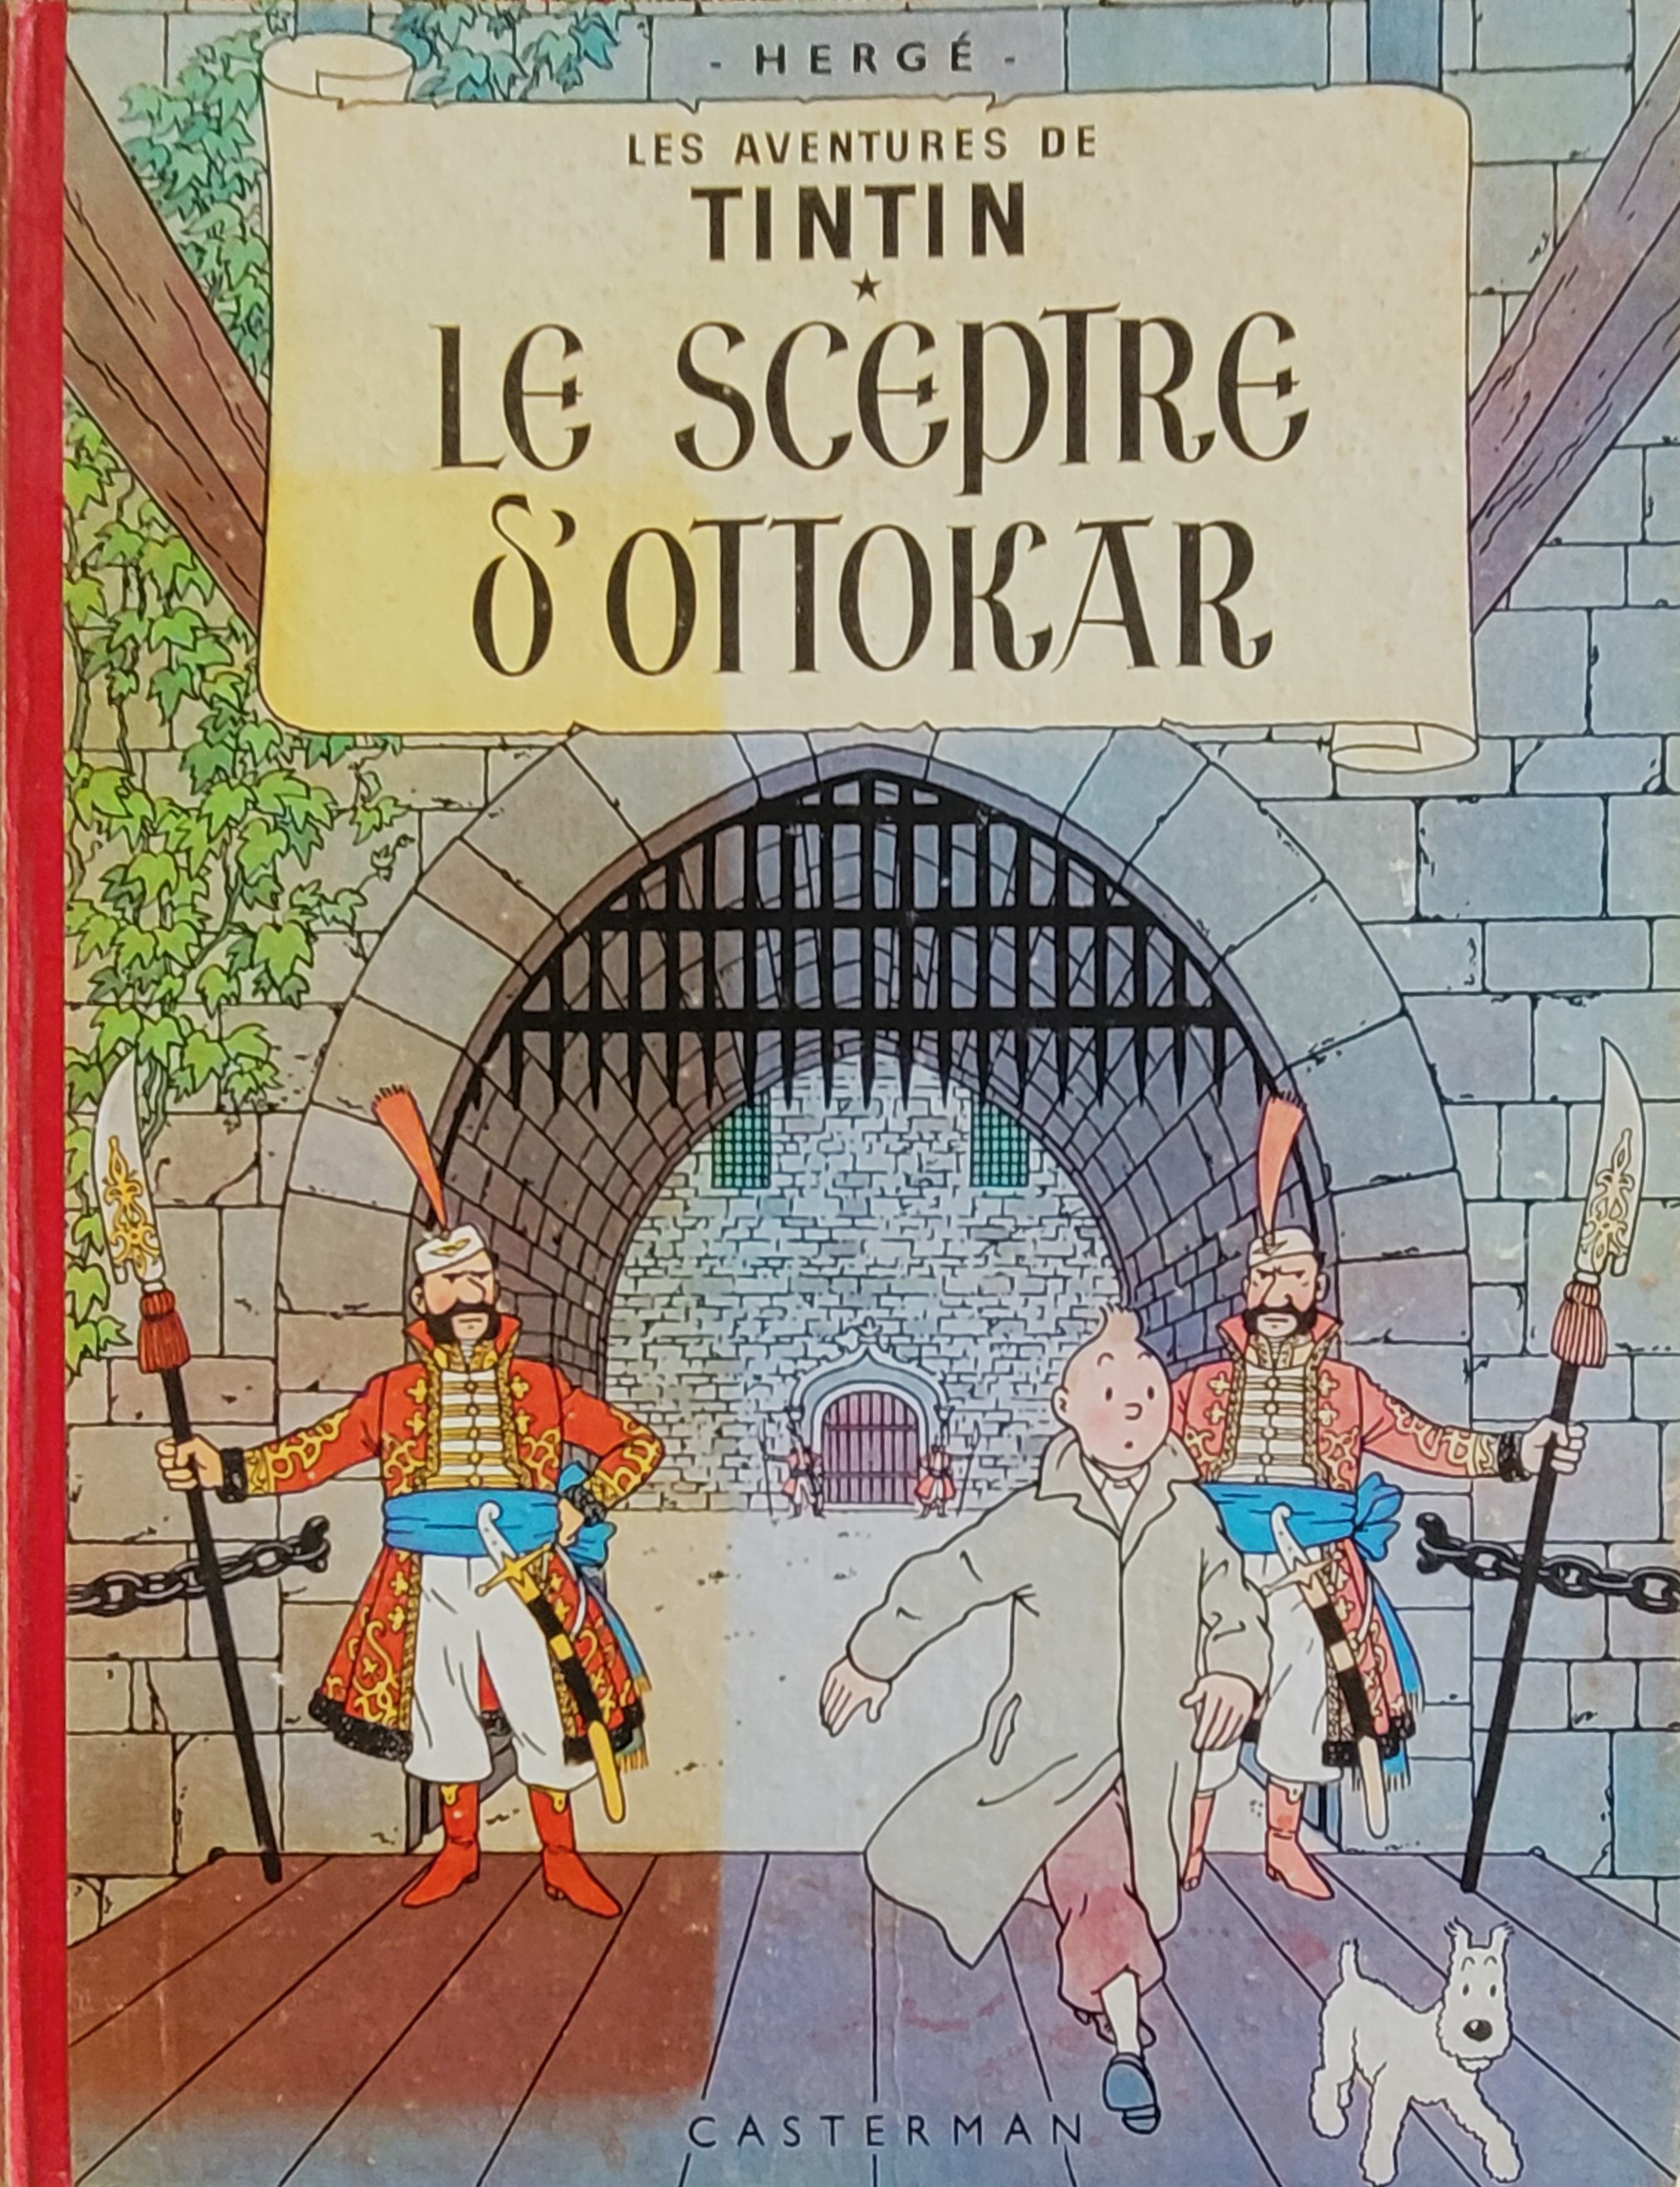 Les Adventures de Tintin: Le Sceptre d' Ottokar - Herge